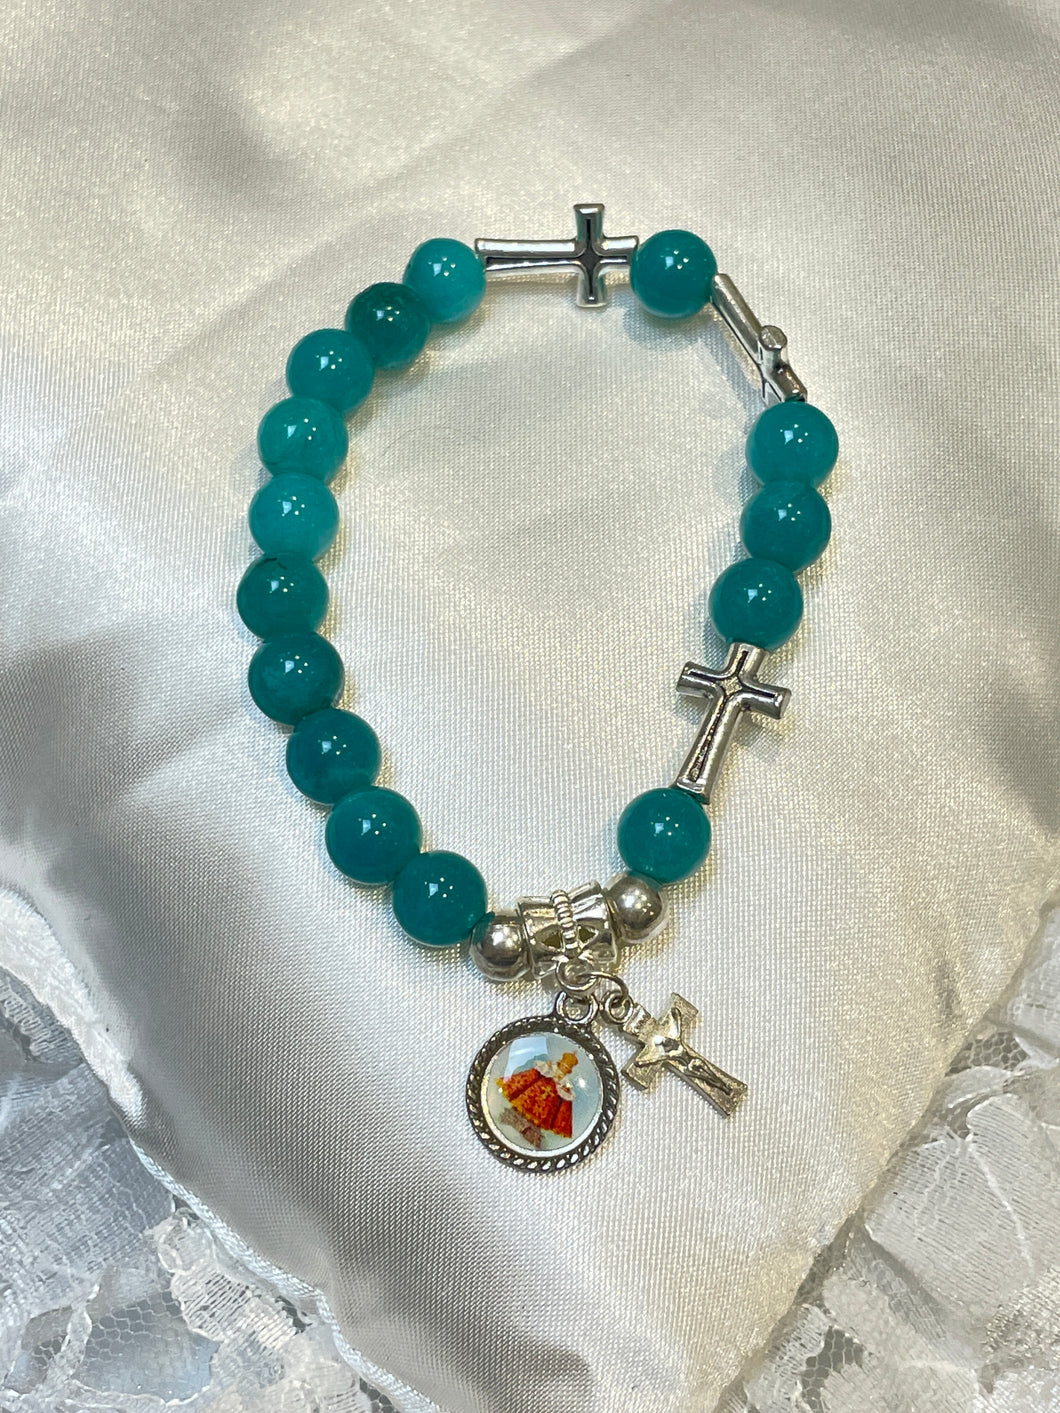 Turquoise Gemstone Rosary Bracelet with Infant Jesus of Prague Image and Crucifix Charms